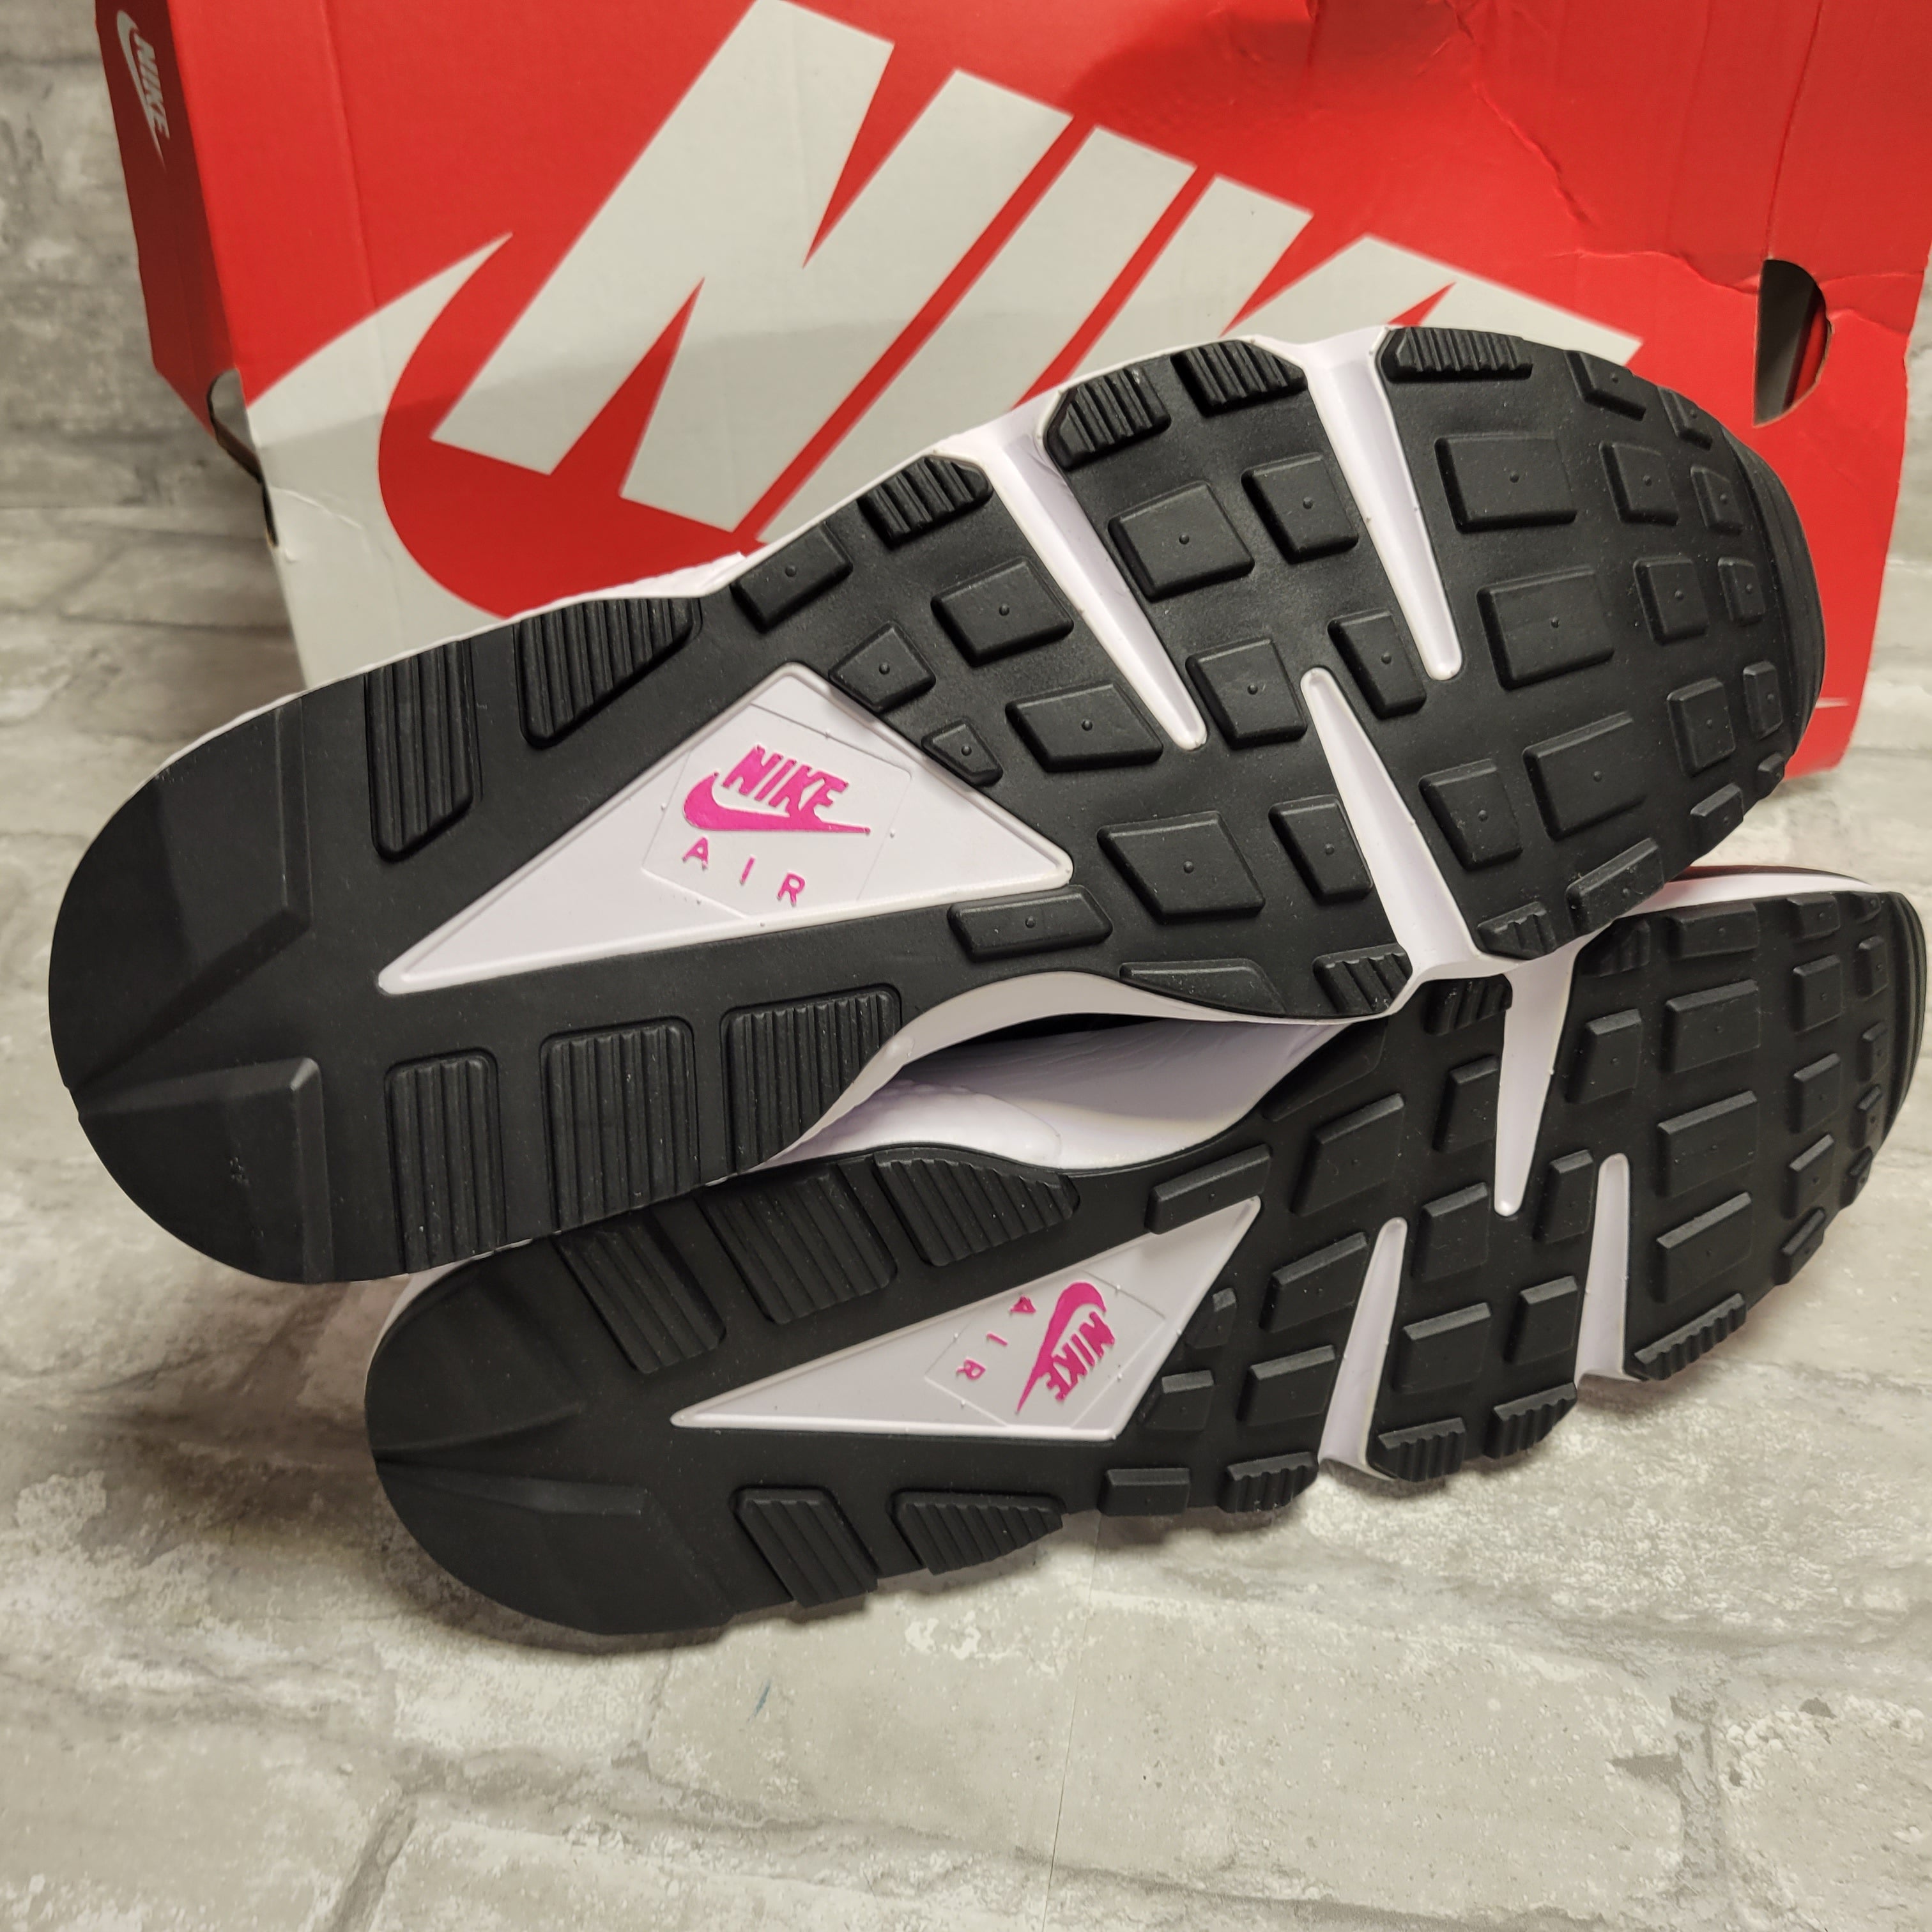 Nike Air Huarache Men's Shoes, Black/Pink, Size 11 (8068526604526)